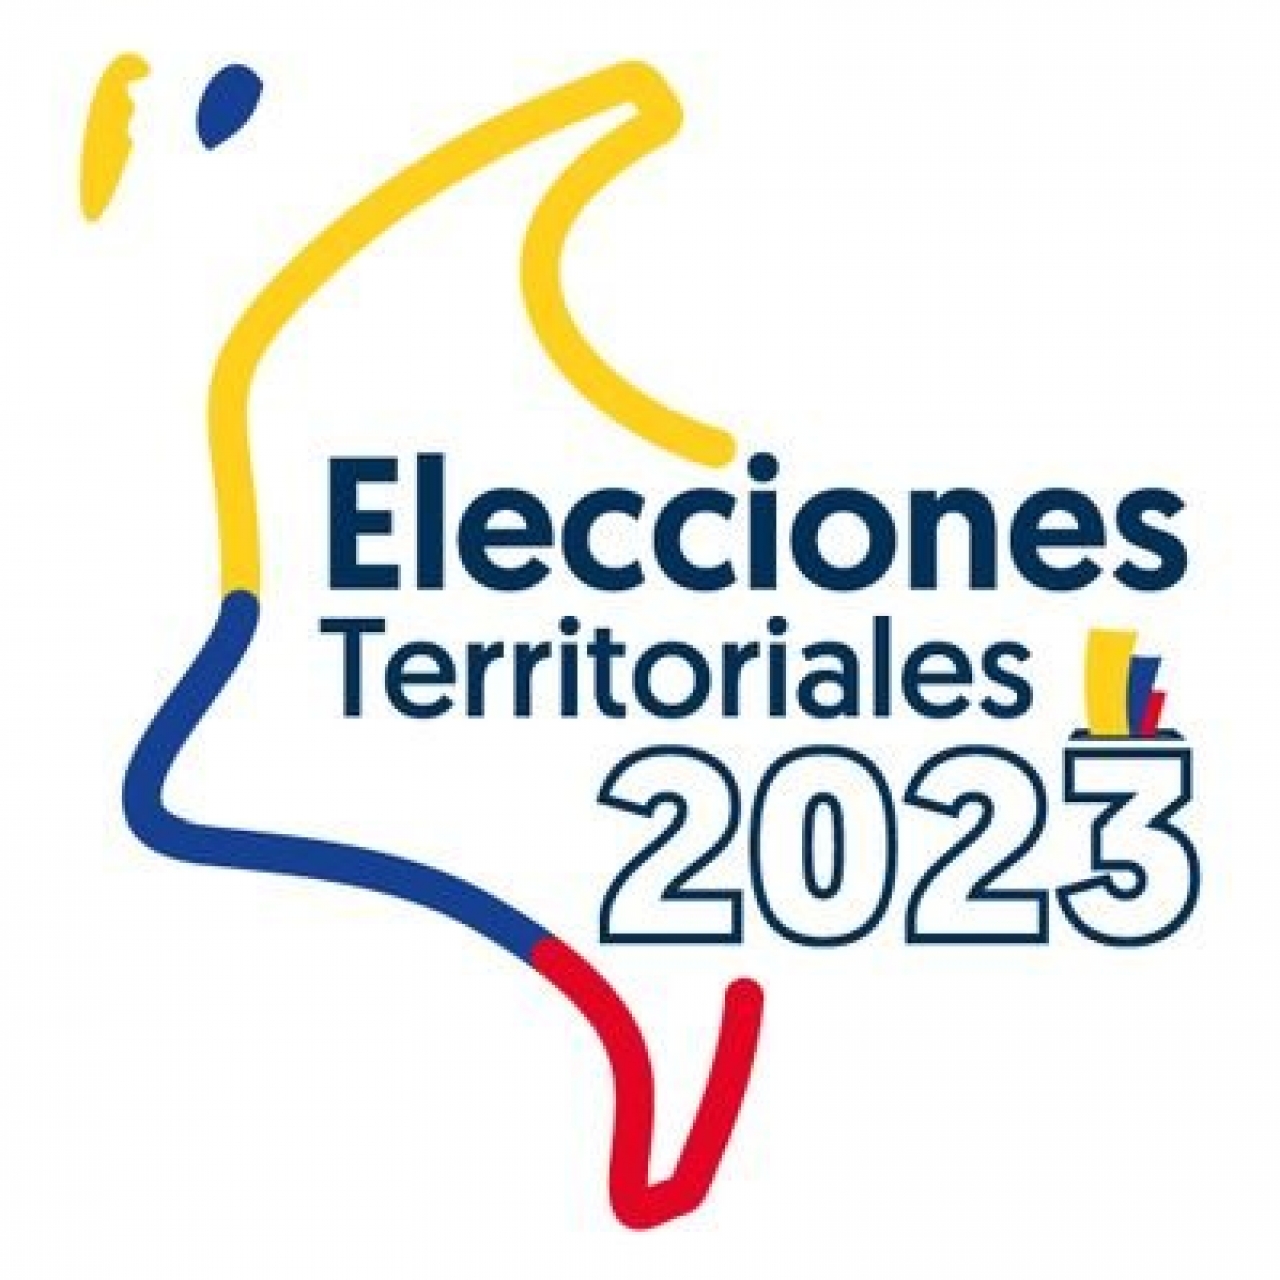 Elecciones territoriales 2023|||